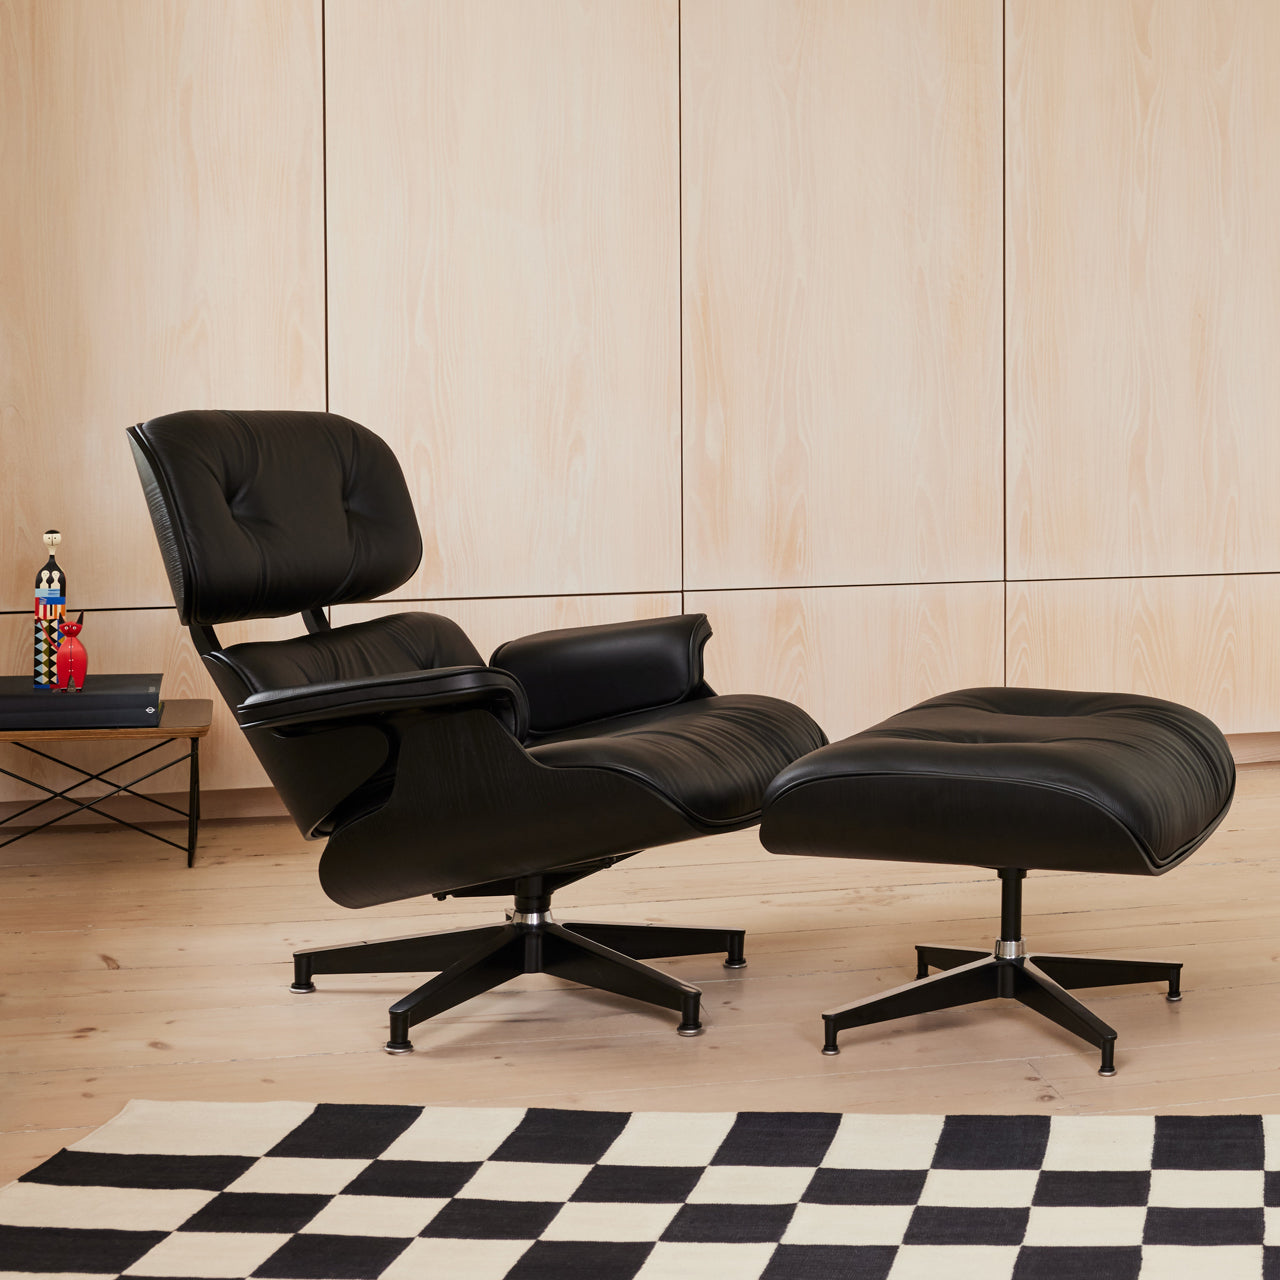 Eames All Black Lounge Chair & Ottoman